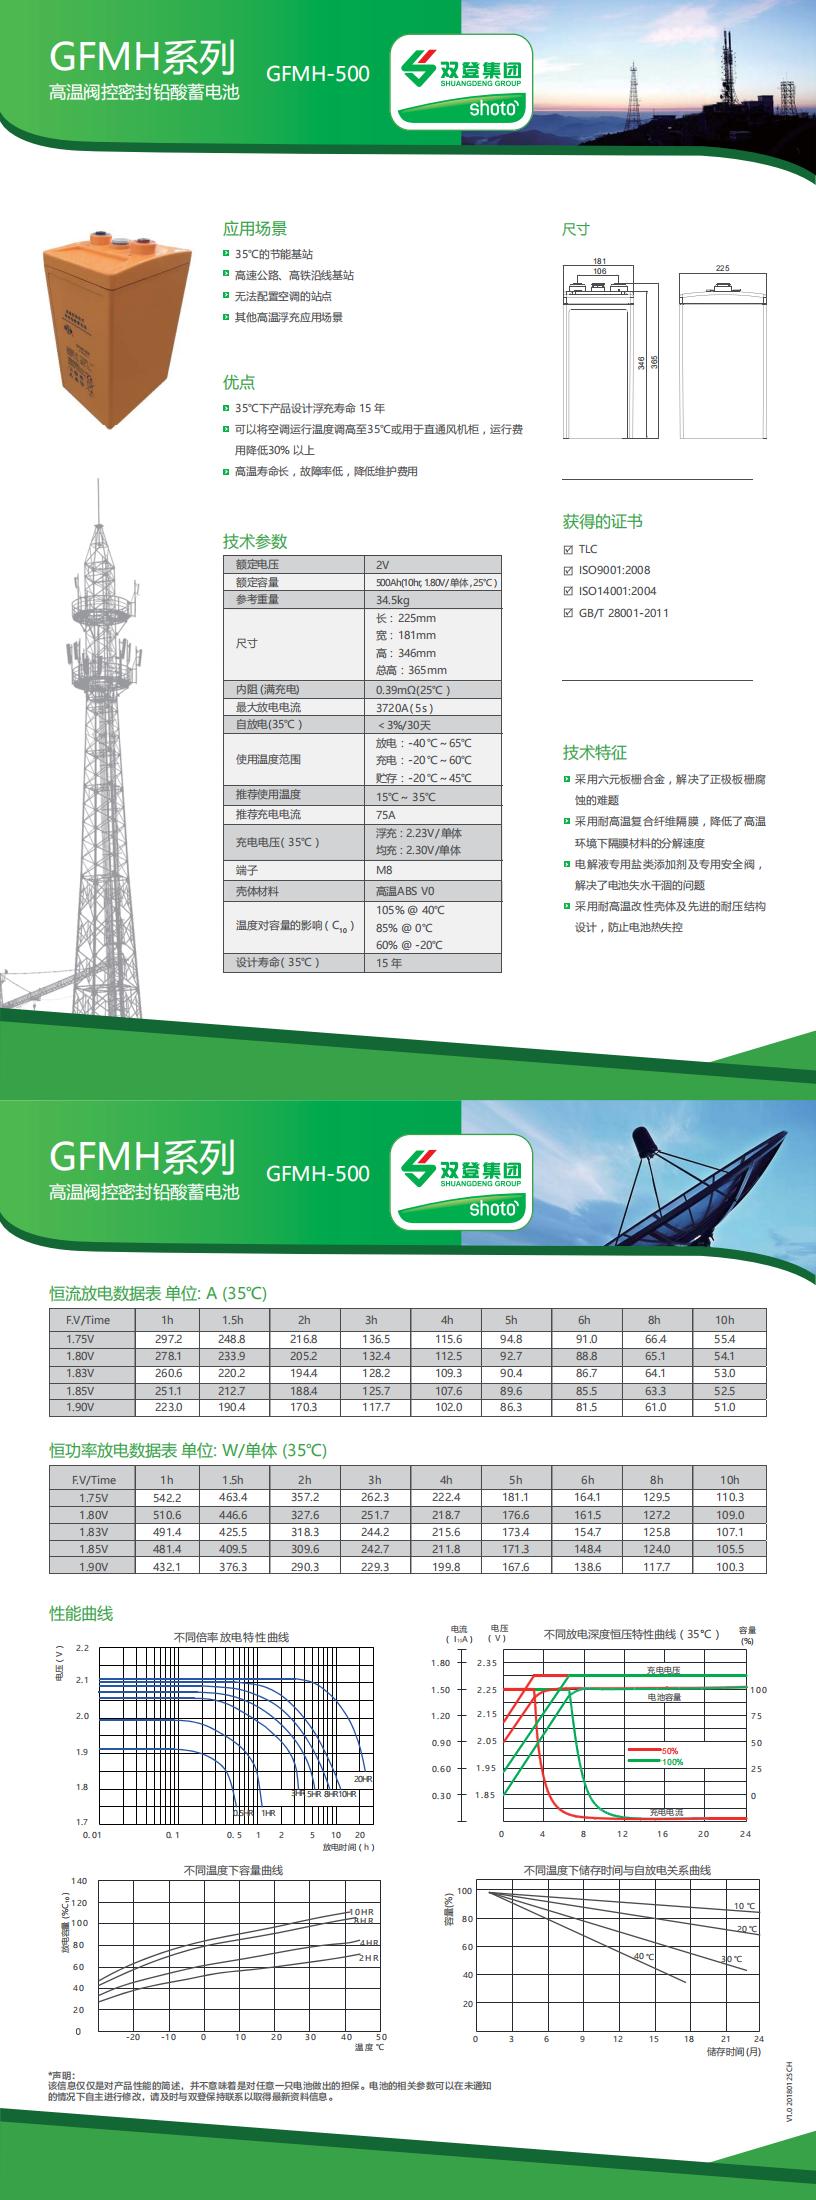 GFMH-500中文_00.jpg